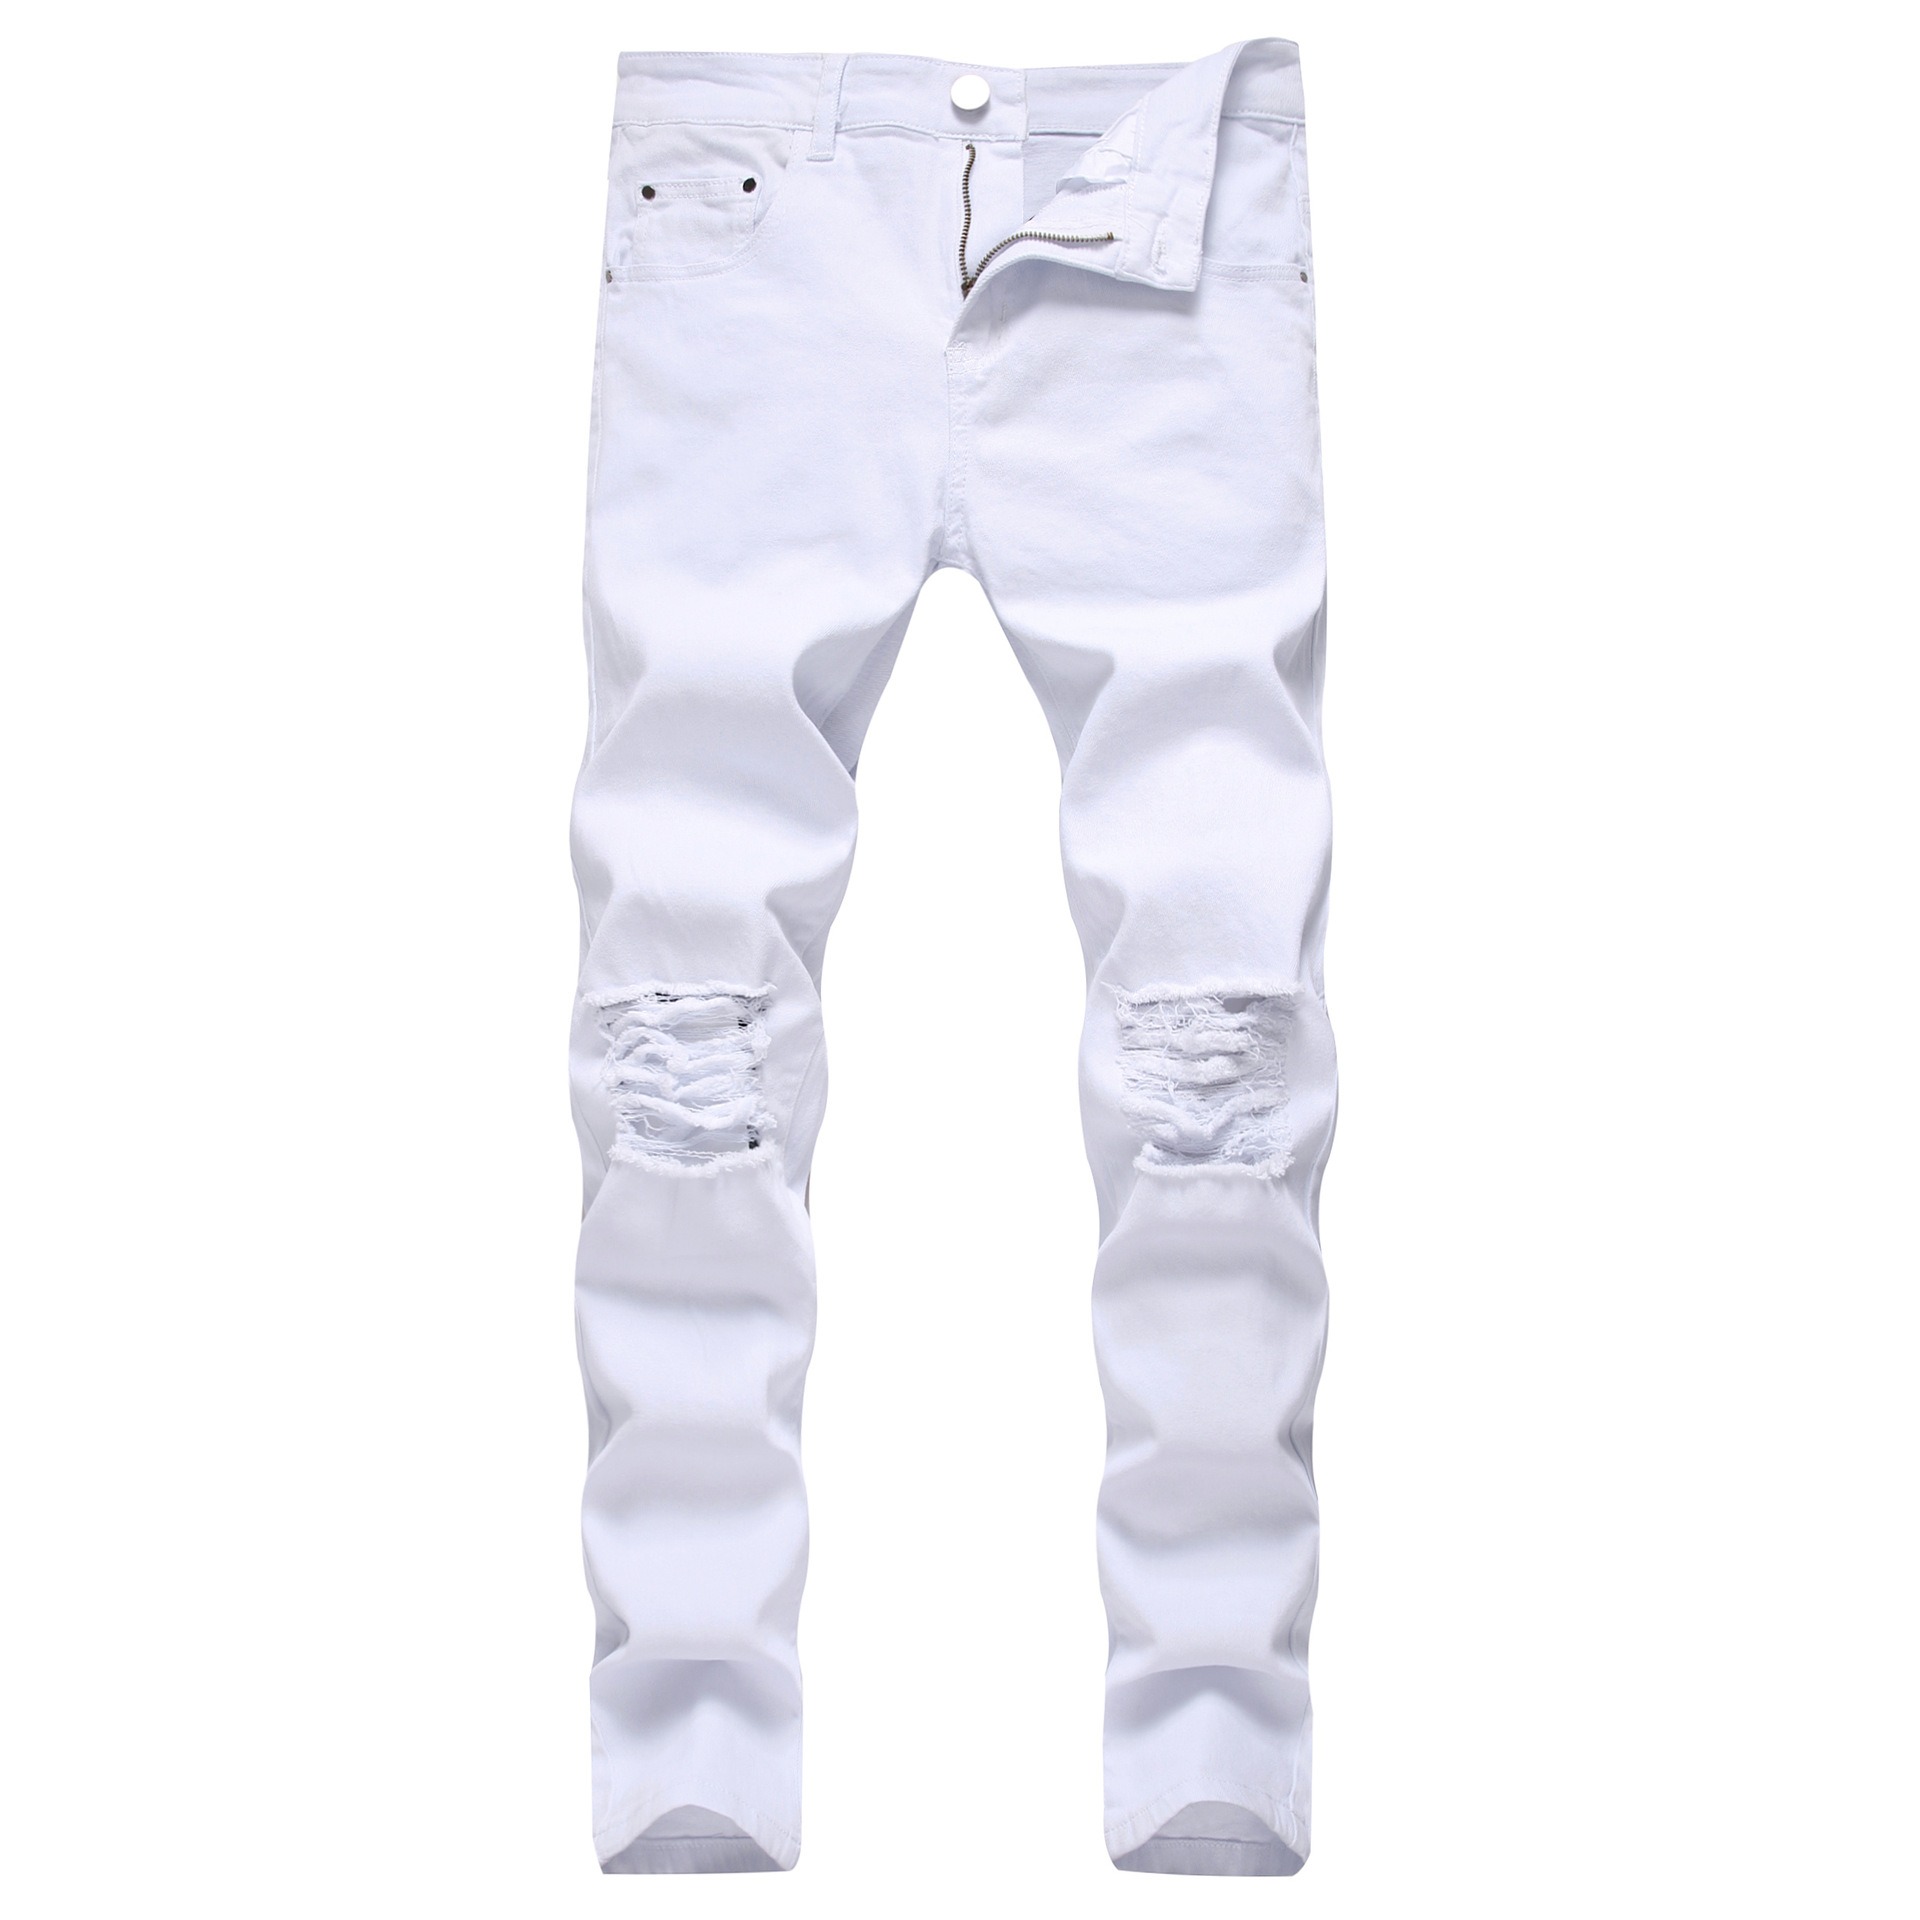 White Ripped Jeans Men's Fashion Slim Skinny Stretch Denim Pants Boy's Destroyed Distressed Armygreen Khaki Black Jean Wholesale